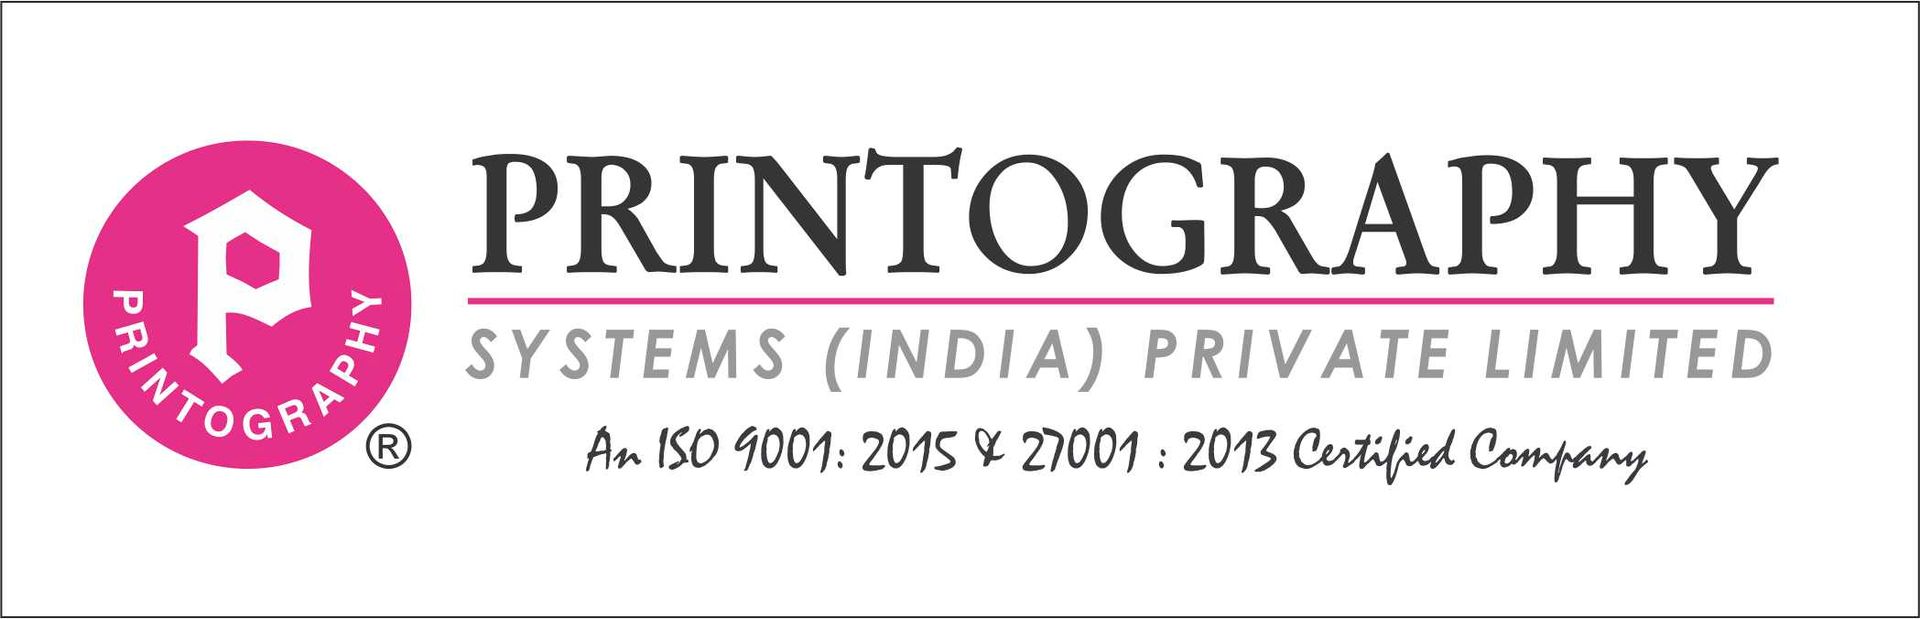 Printography Systems (India) Pvt Ltd logo